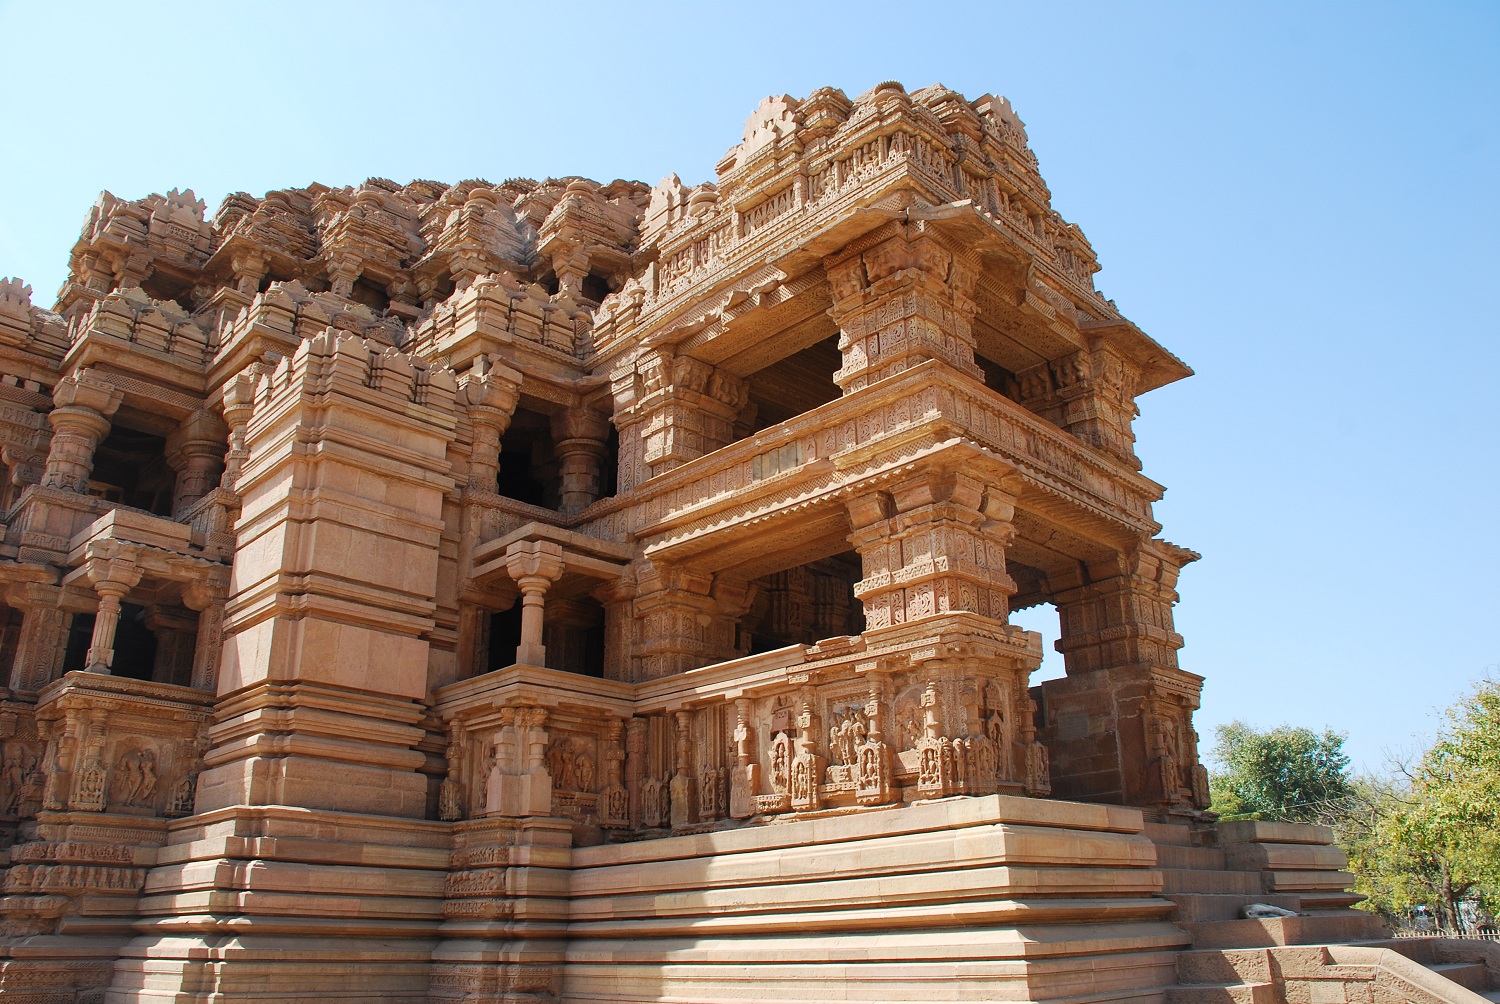 Sas Bahu Temple in Gwalior